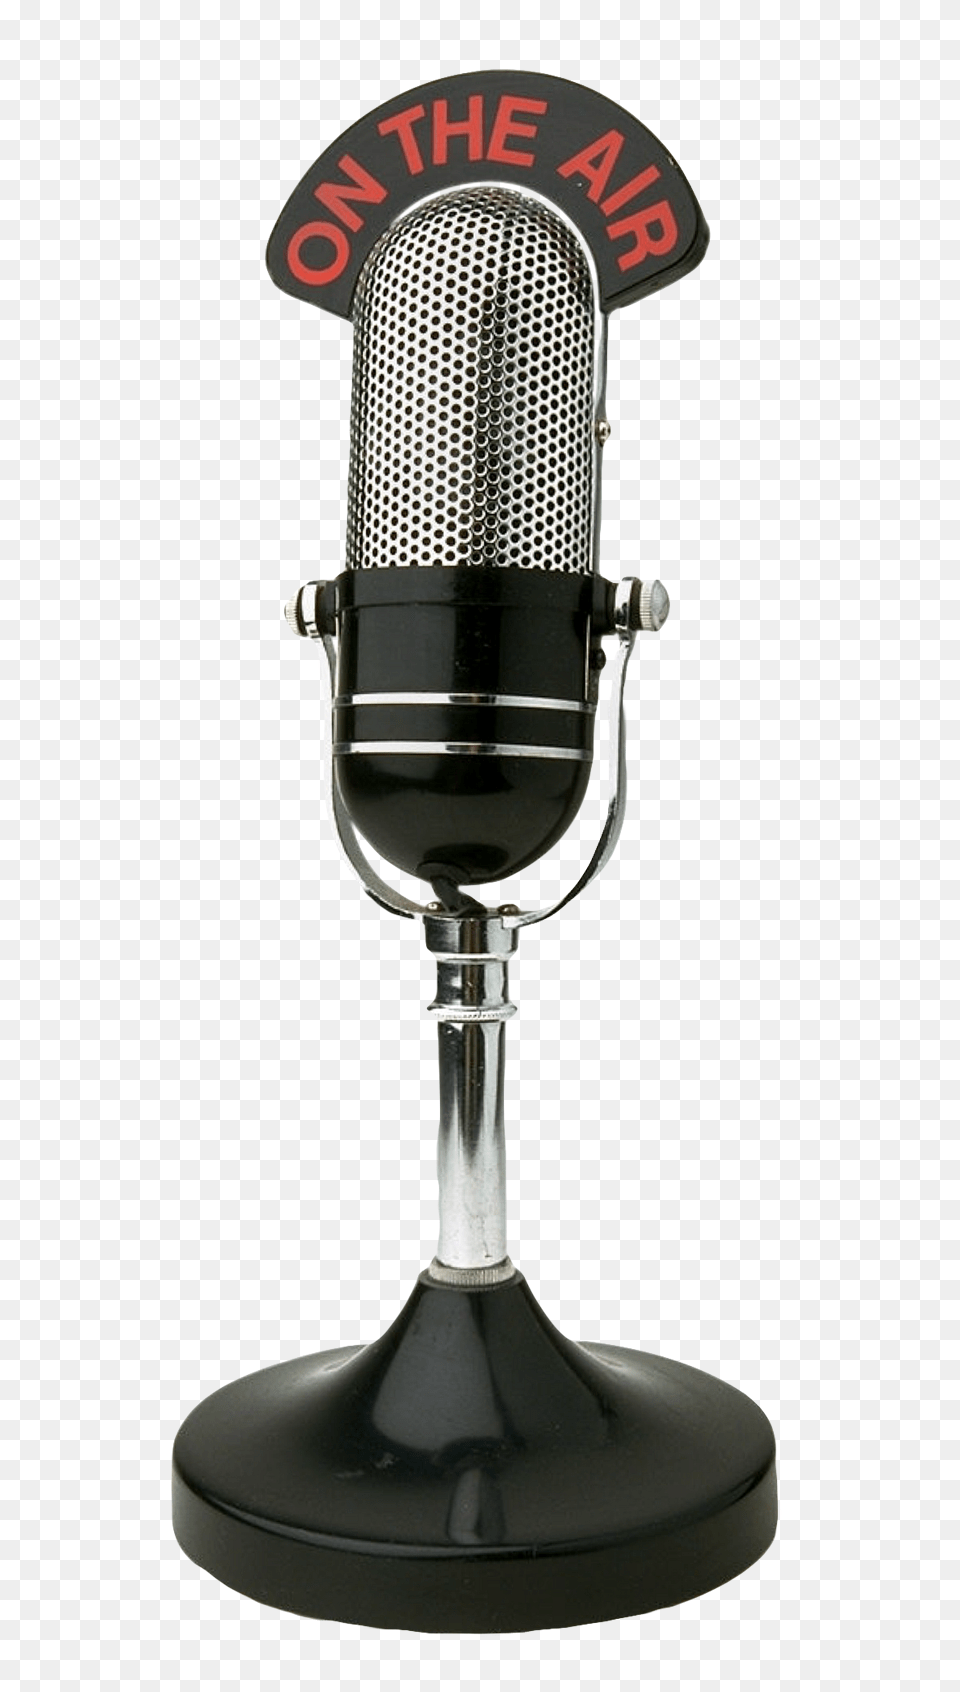 Pngpix Com Microphone Transparent Electrical Device Png Image